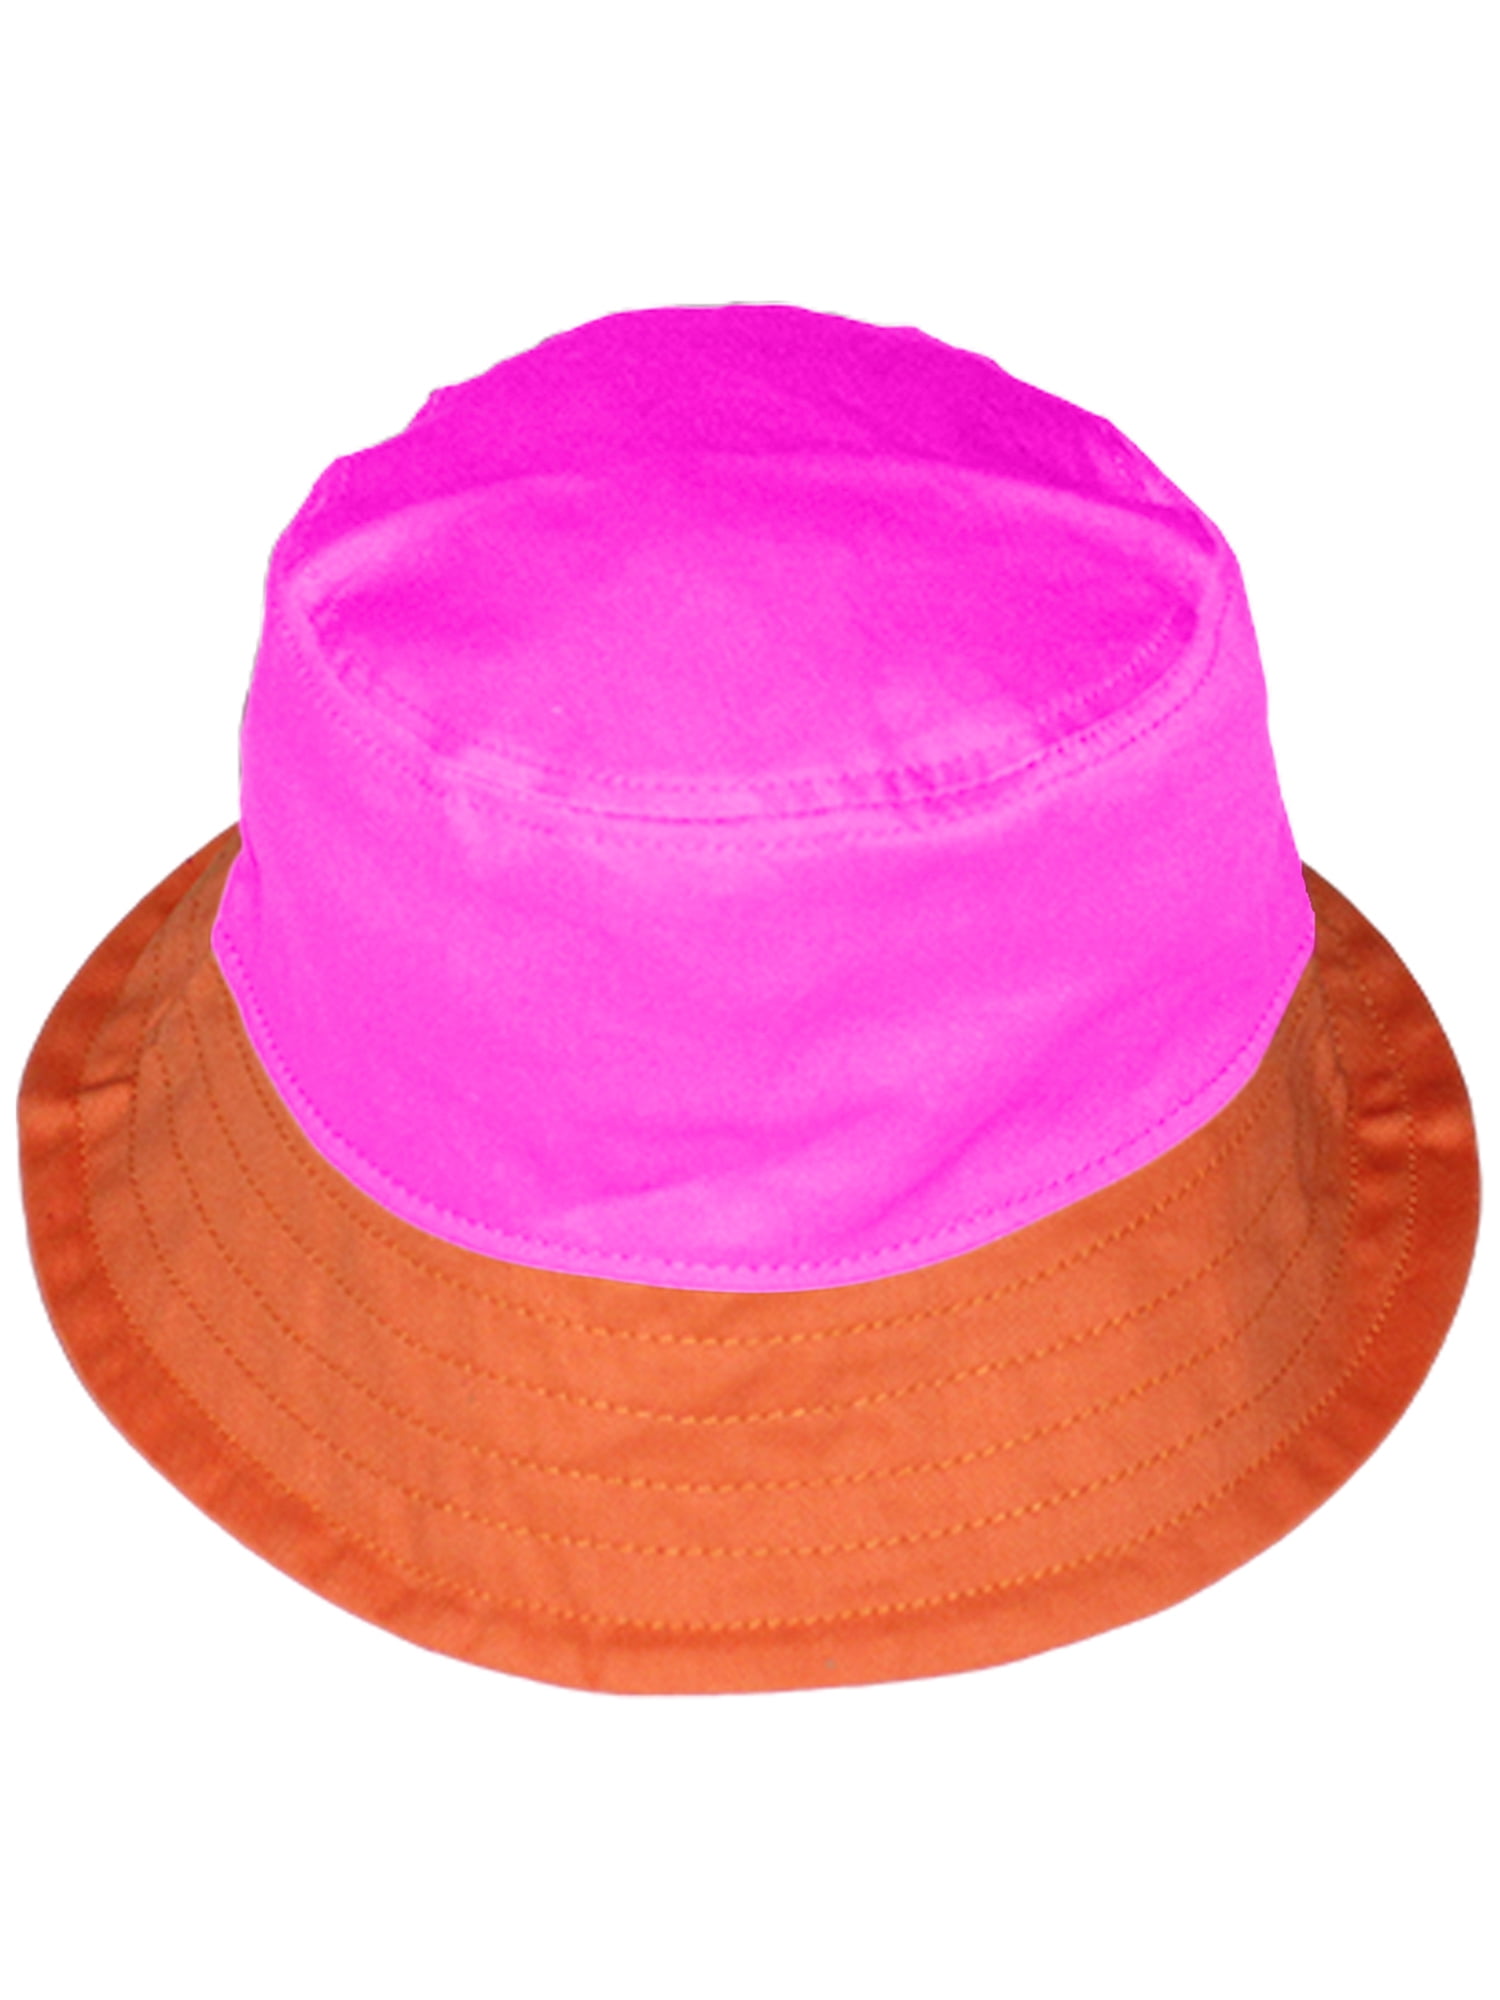 Childrens Hot Pink Bush Hat Boys Girls Cotton Summer Sun Bucket Cap Plain Kids 